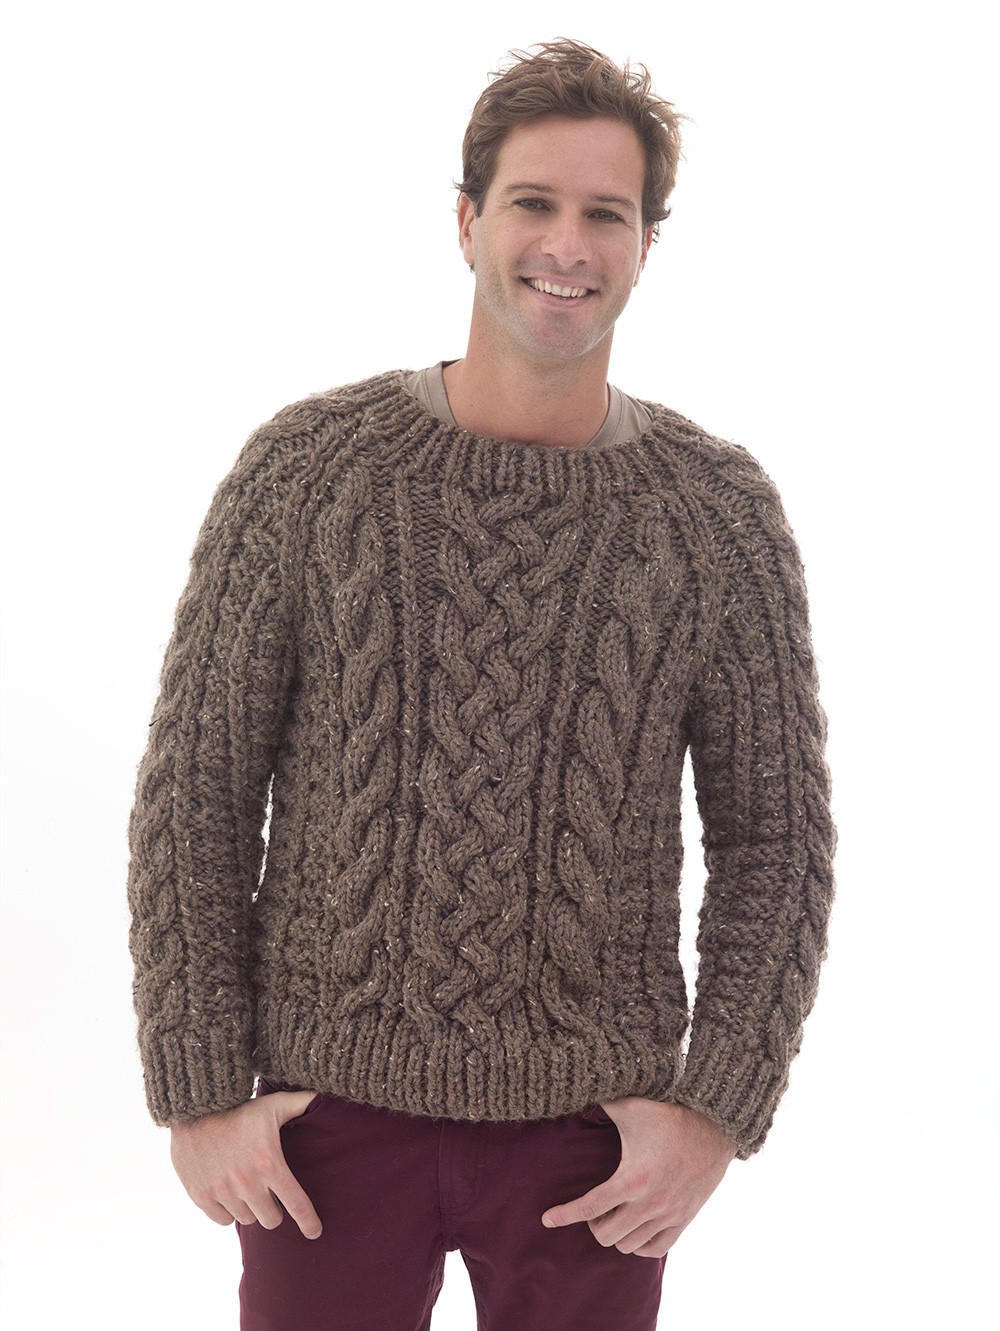 Raglan Cabled Pullover Knit